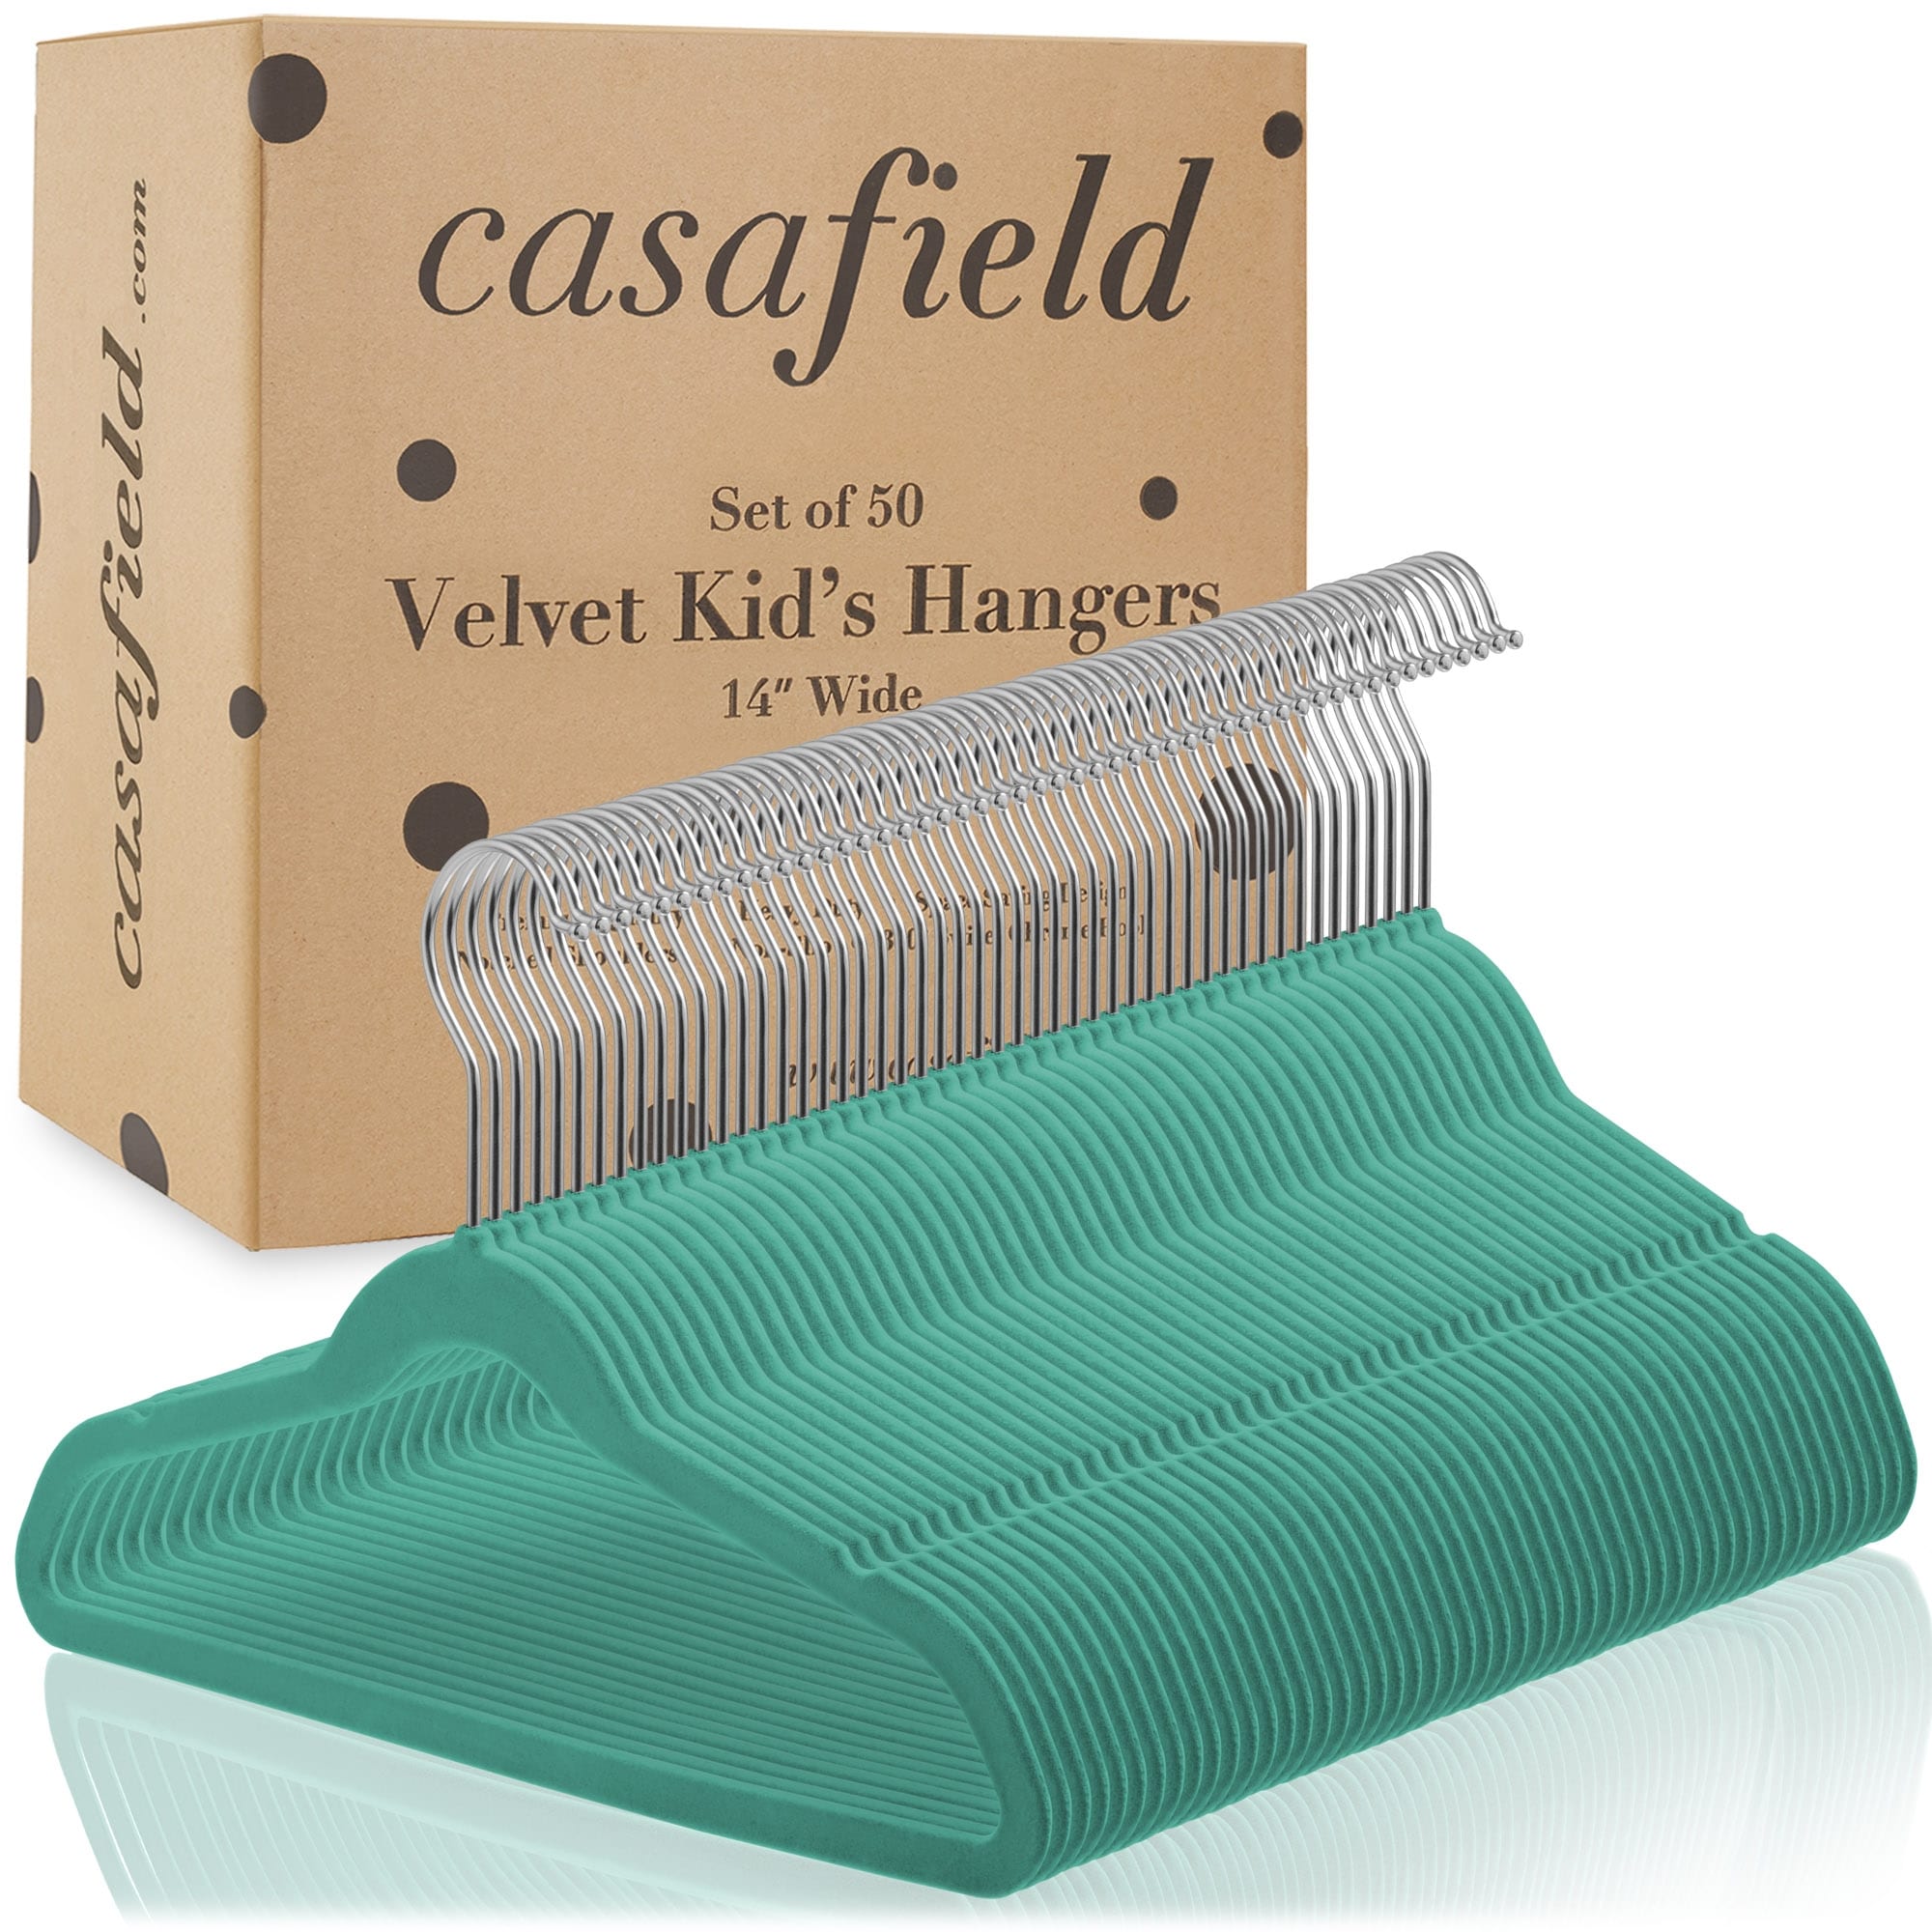 50 Velvet 14 Kid's Hangers by Casafield - Bed Bath & Beyond - 30827875